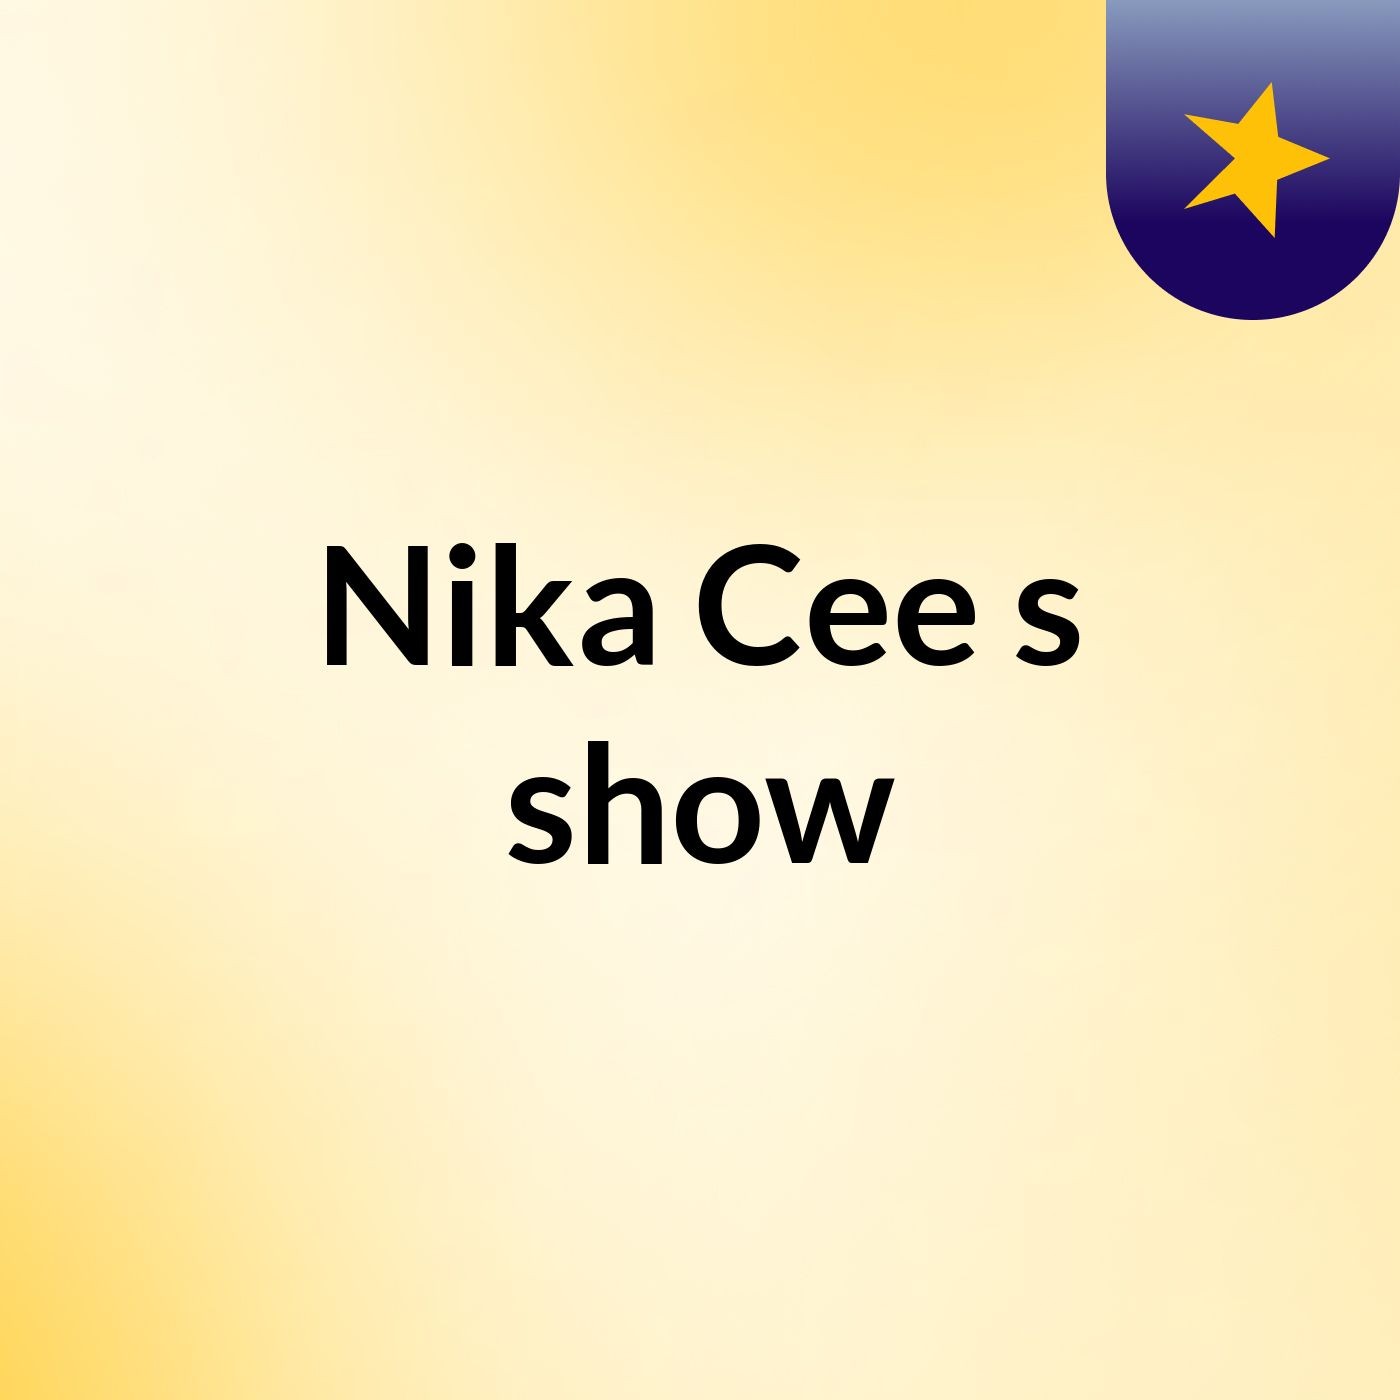 Nika Cee's show